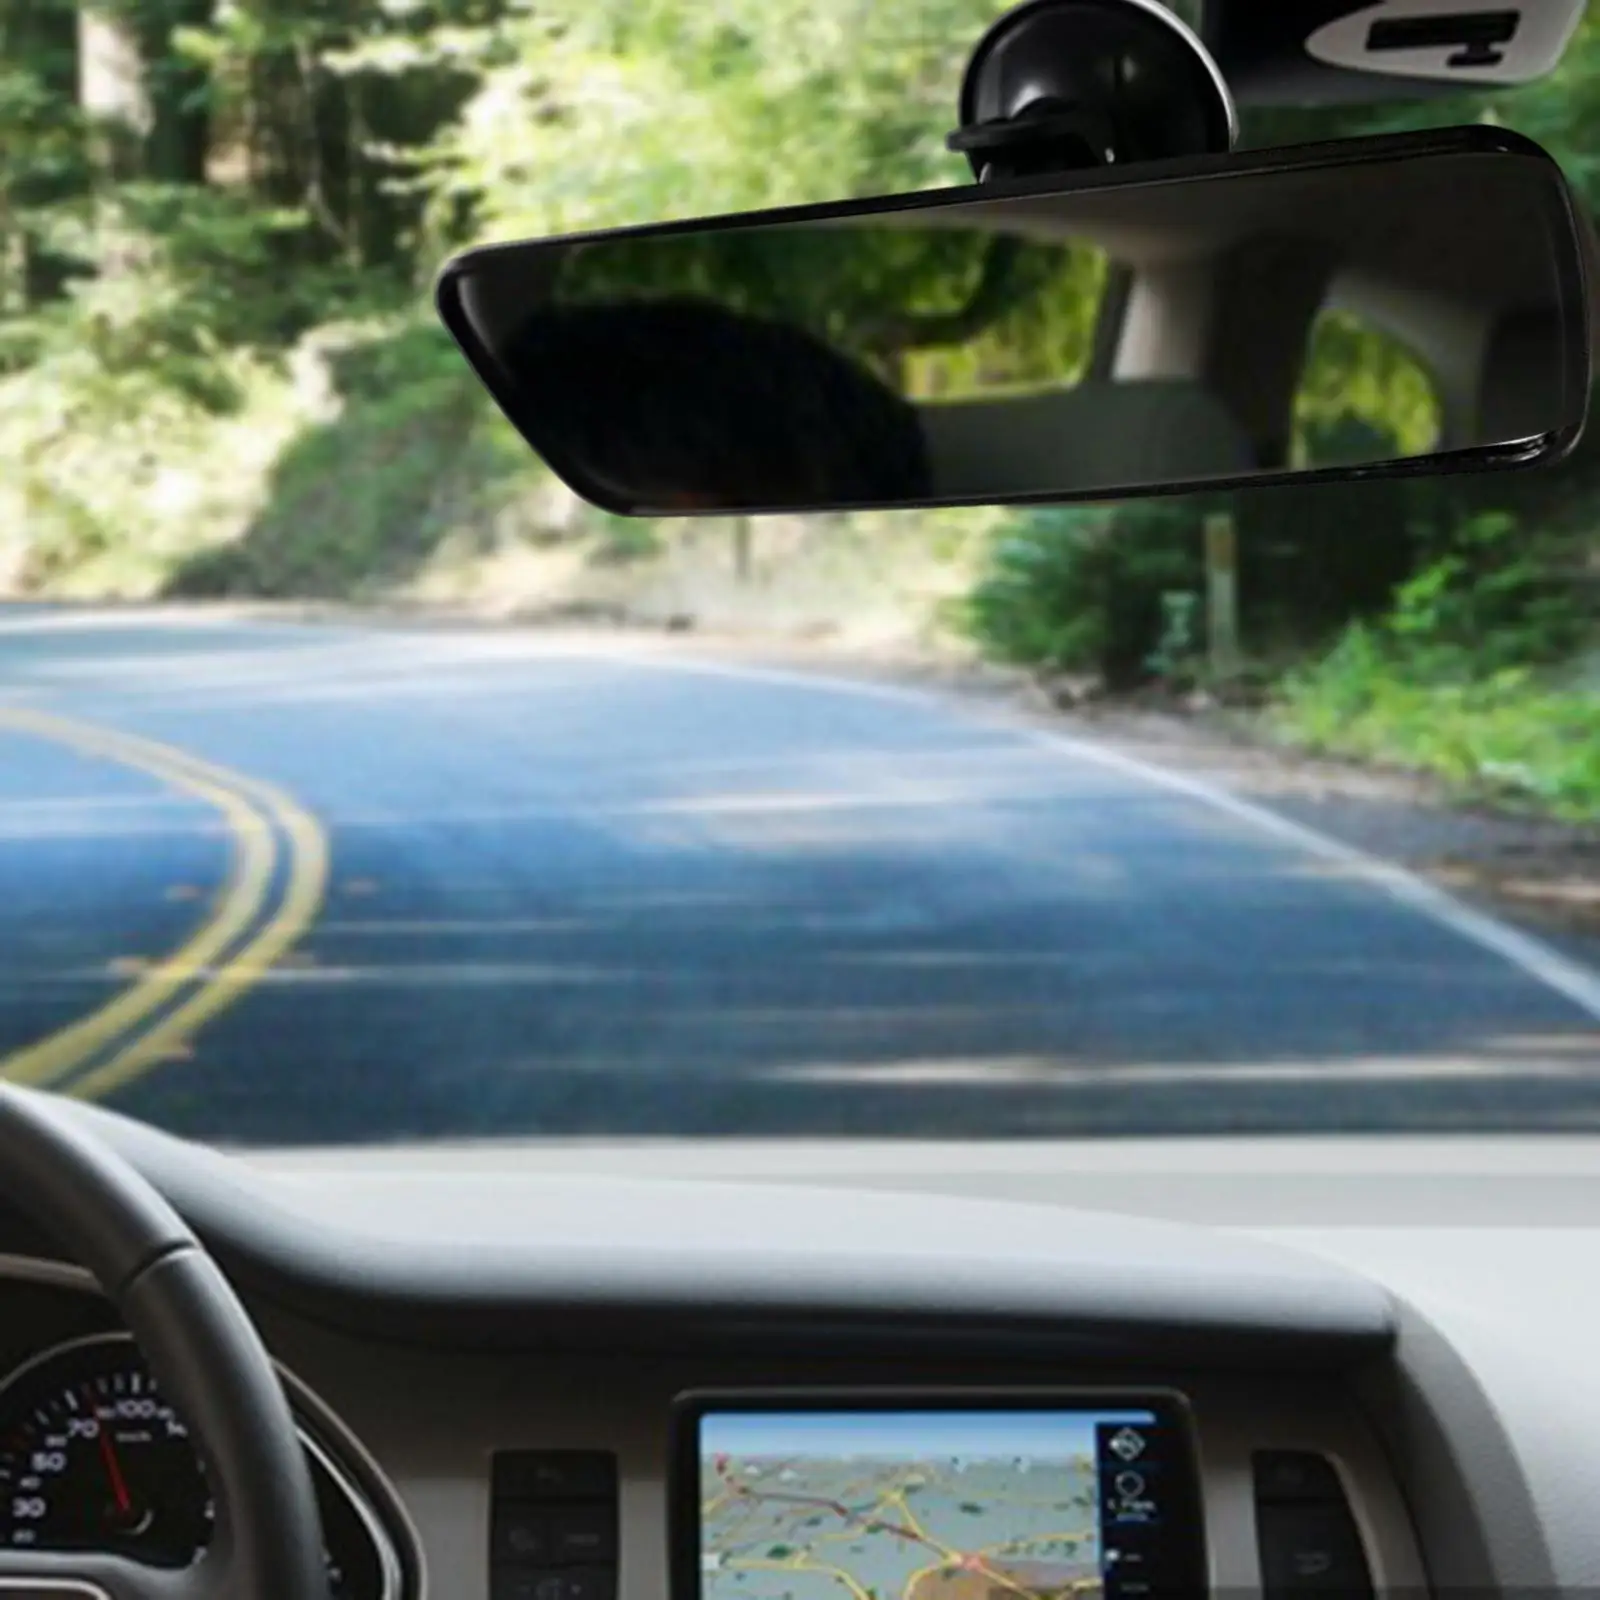 Universal Interior Rear View Mirror, Interior Mirror Strong Adsorption Driving